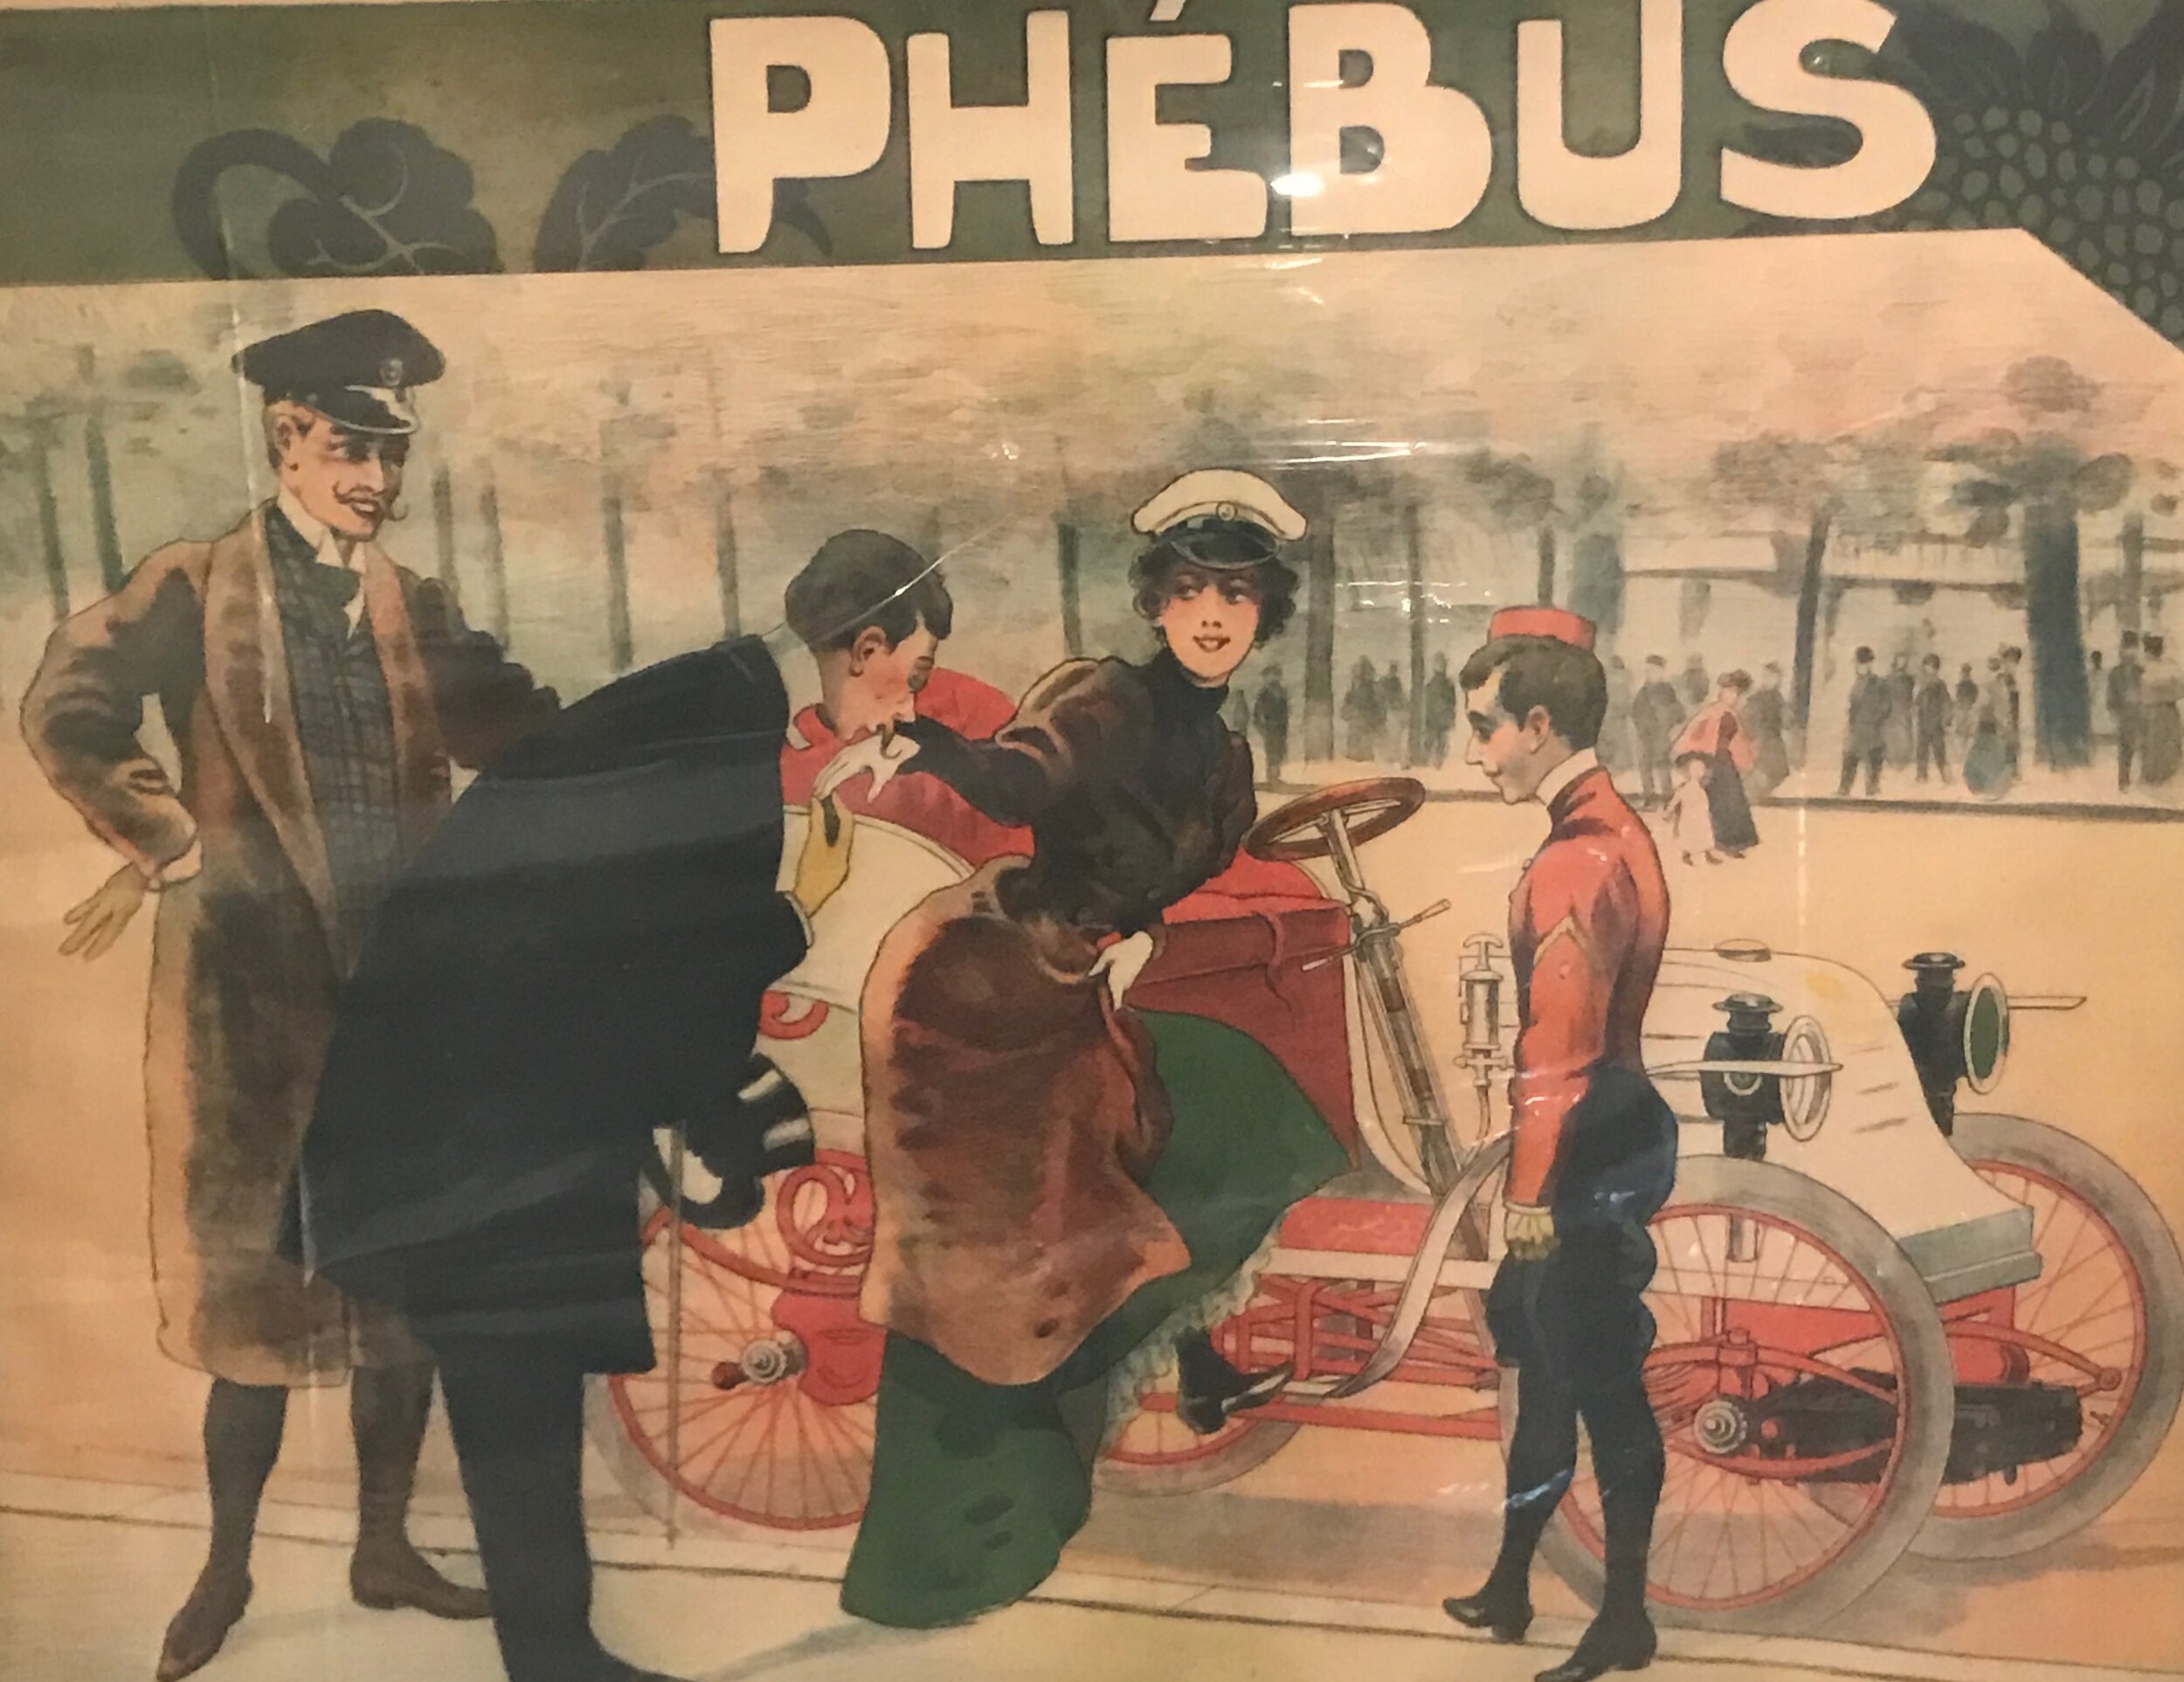 Phebus Auto